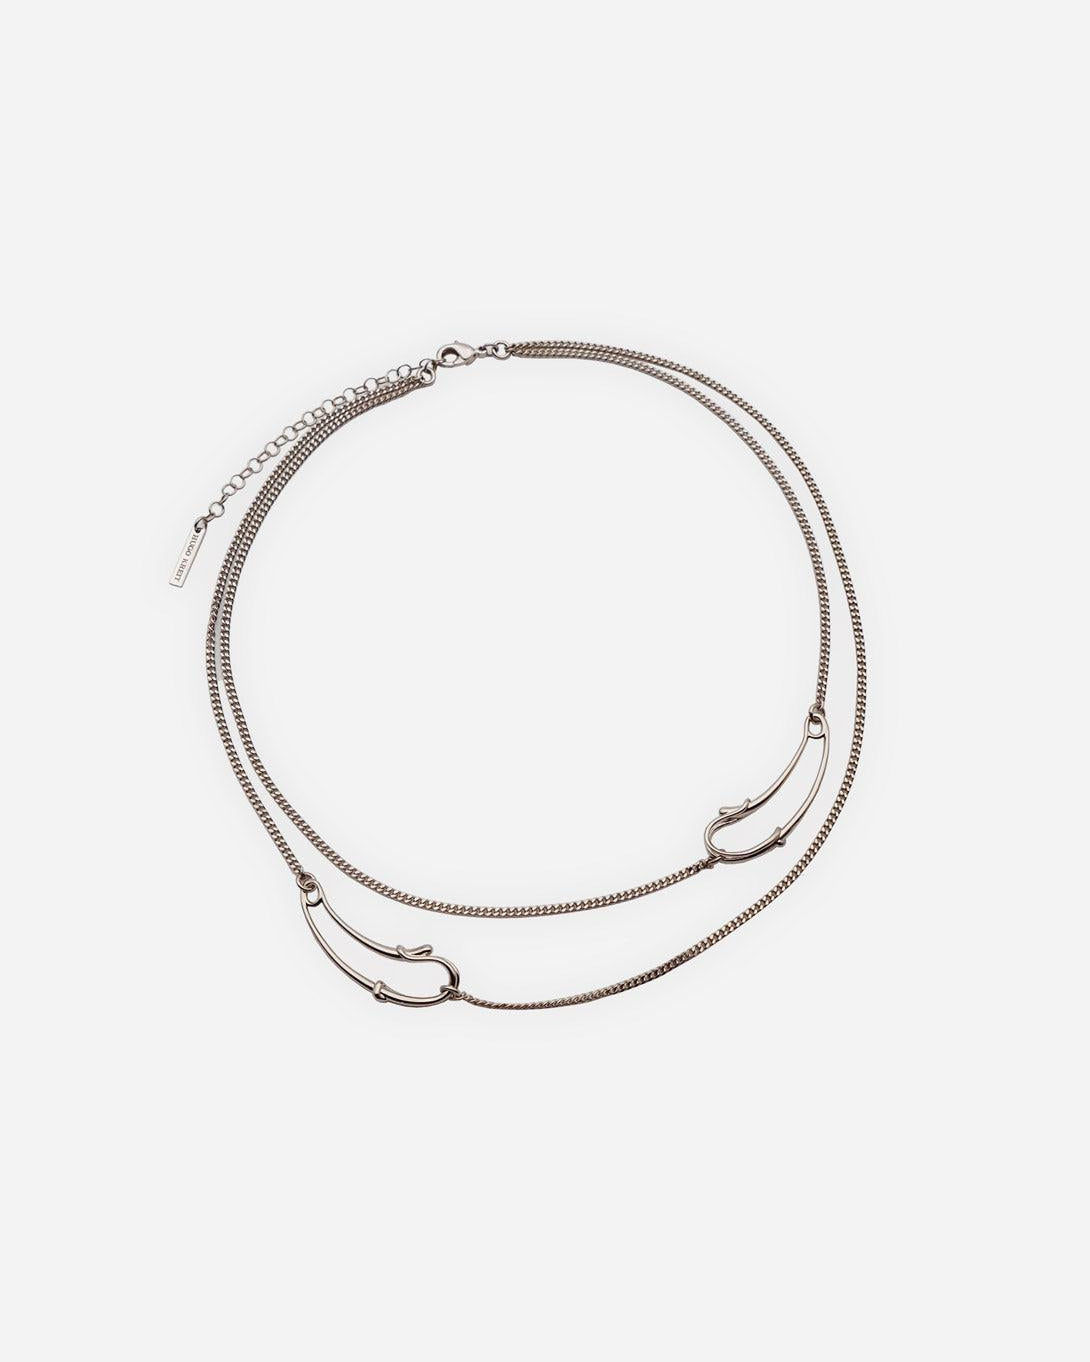 Silver Safety Chain - Jewelry - Hugo Kreit - Elevastor